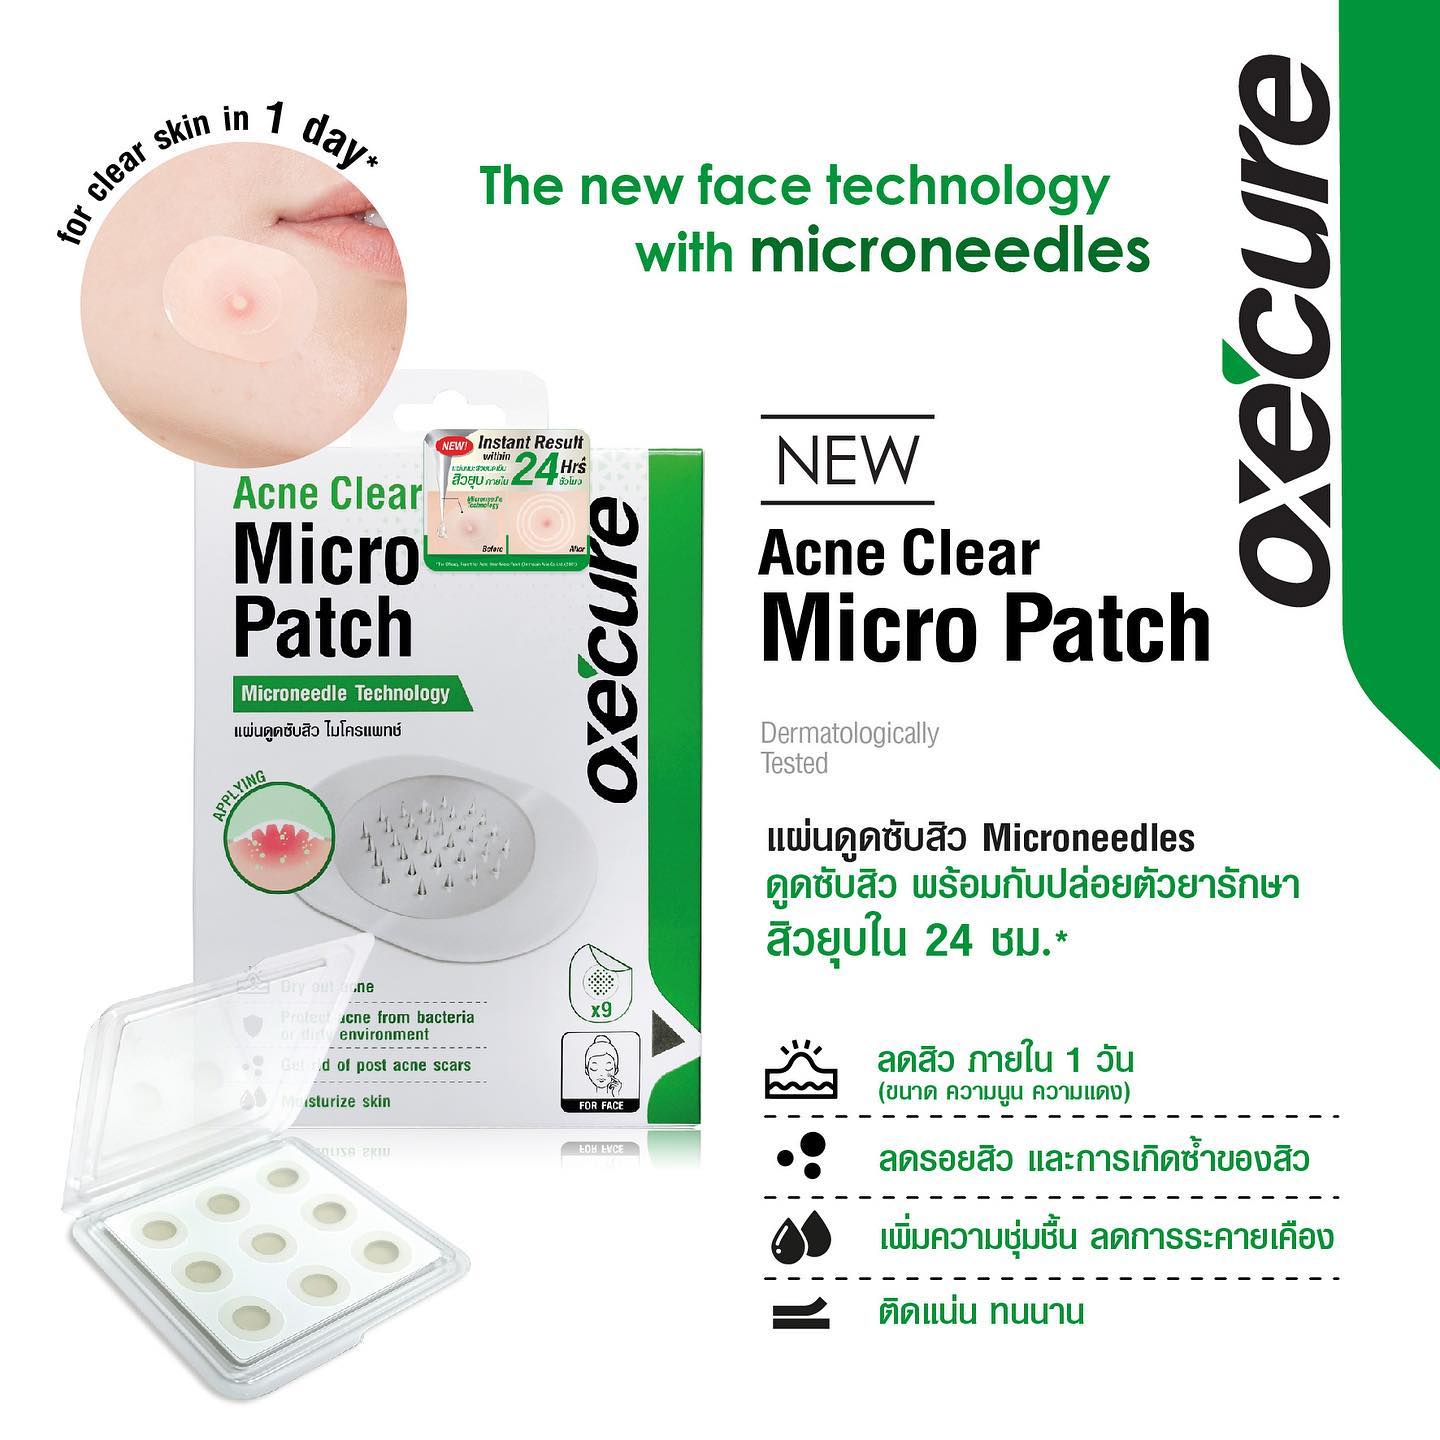 OXE'CURE Acne Clear Micro Patch 9ชิ้น/กล่อง แผ่นแปะสิวนวัตกรรมใหม่ด้วยเทคโนโลยี “self-dissolve Microneedles” เข็มเล็กๆที่อัดแน่นด้วยสารสกัดสำหรับรักษาปัญหาสิวที่ต้นเหตุ